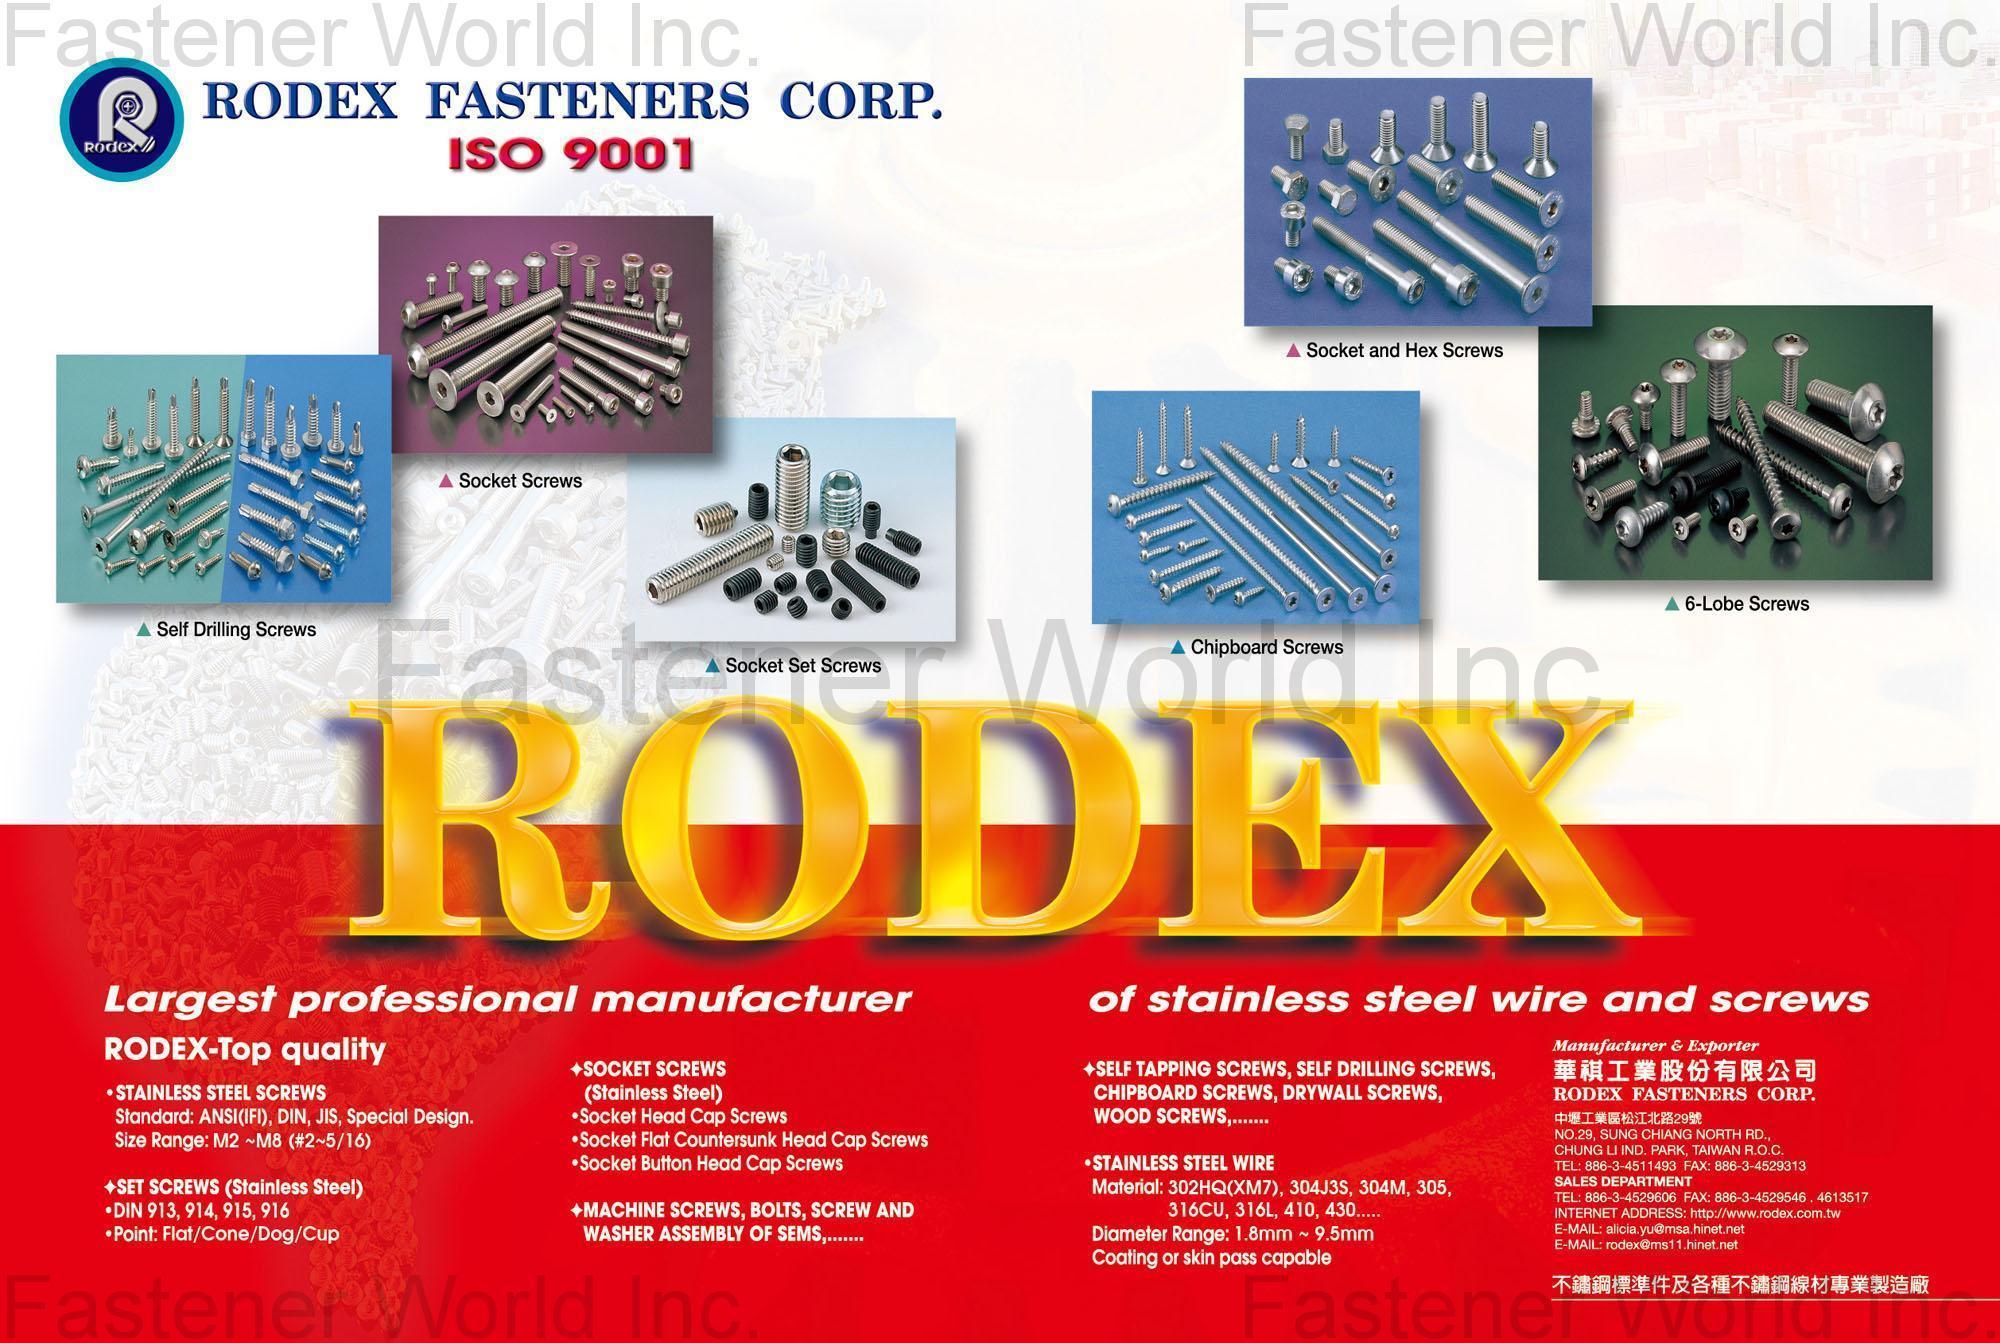 RODEX FASTENERS CORP. , Self Drilling Screws, Socket Screws, Socket Set Screws, Chipborad Screws, Socket and Hex Screws, 6-Lobe Screws , Hexagon Head Cap Screws